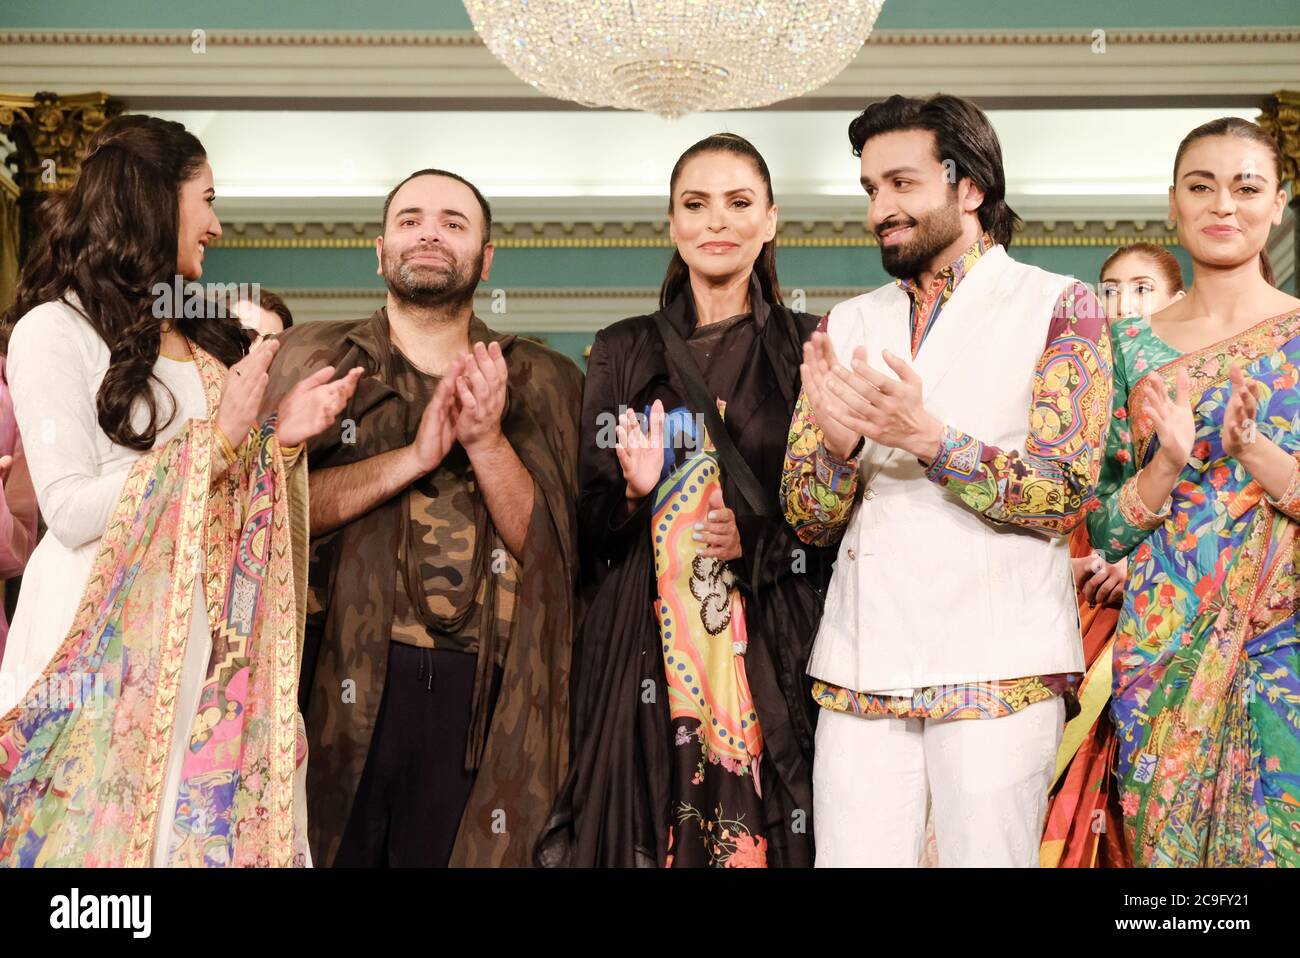 Gli attori pakistani Mehwish Hayat, Azfar Rehman Kashmiri, Sadaf Kanwal con il modello Fouzia Aman si sono accampati al finale per la stilista Fahad Husseyn. Foto Stock